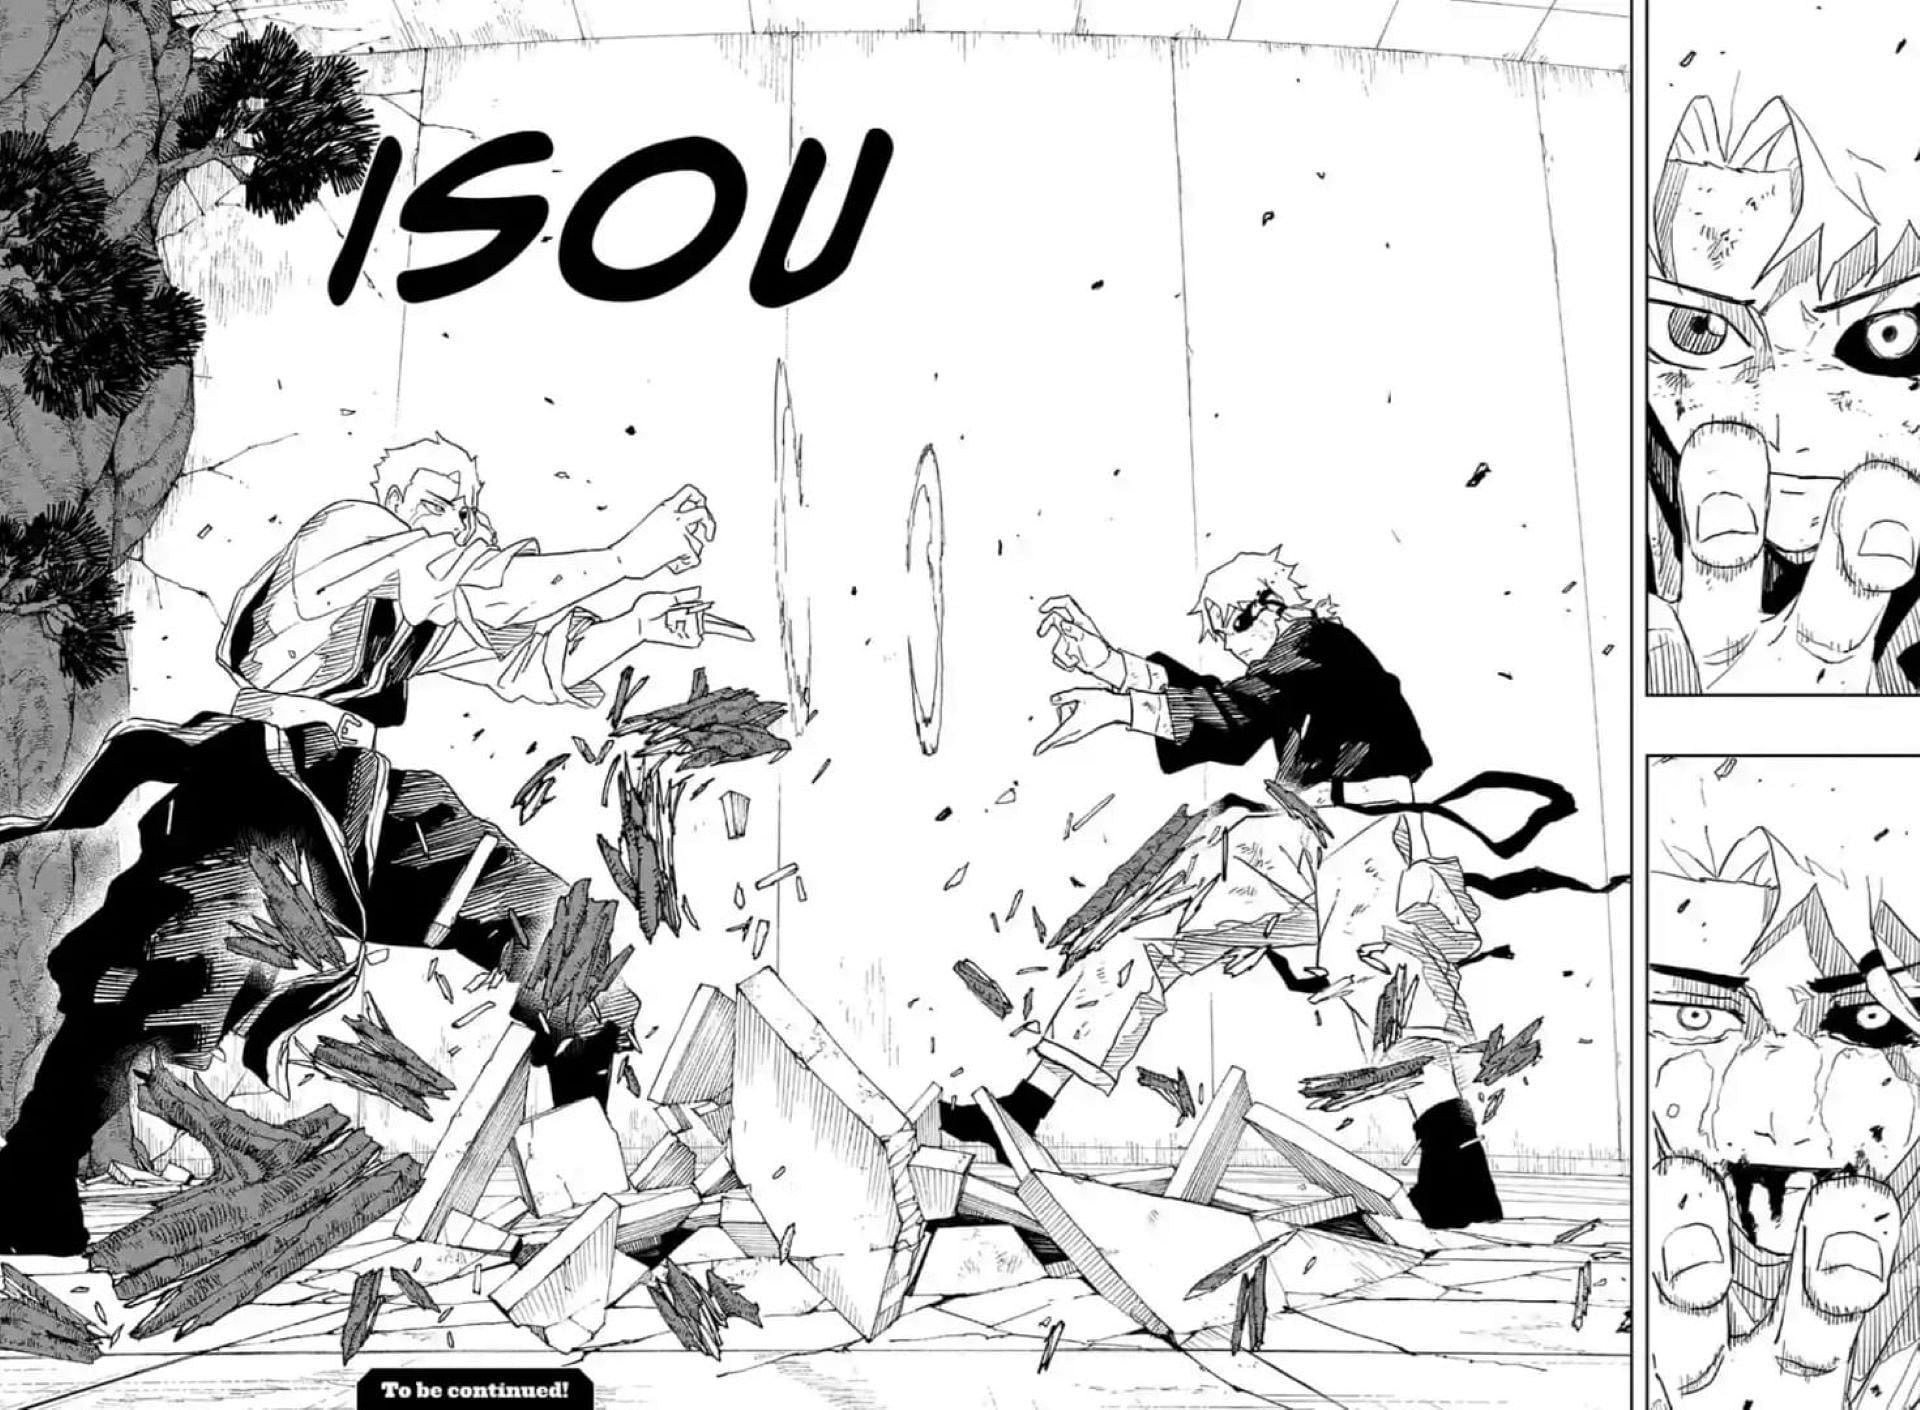 Hakuri vs Soya in the chapter (Image via Takeru Hokazono/Shueisha)